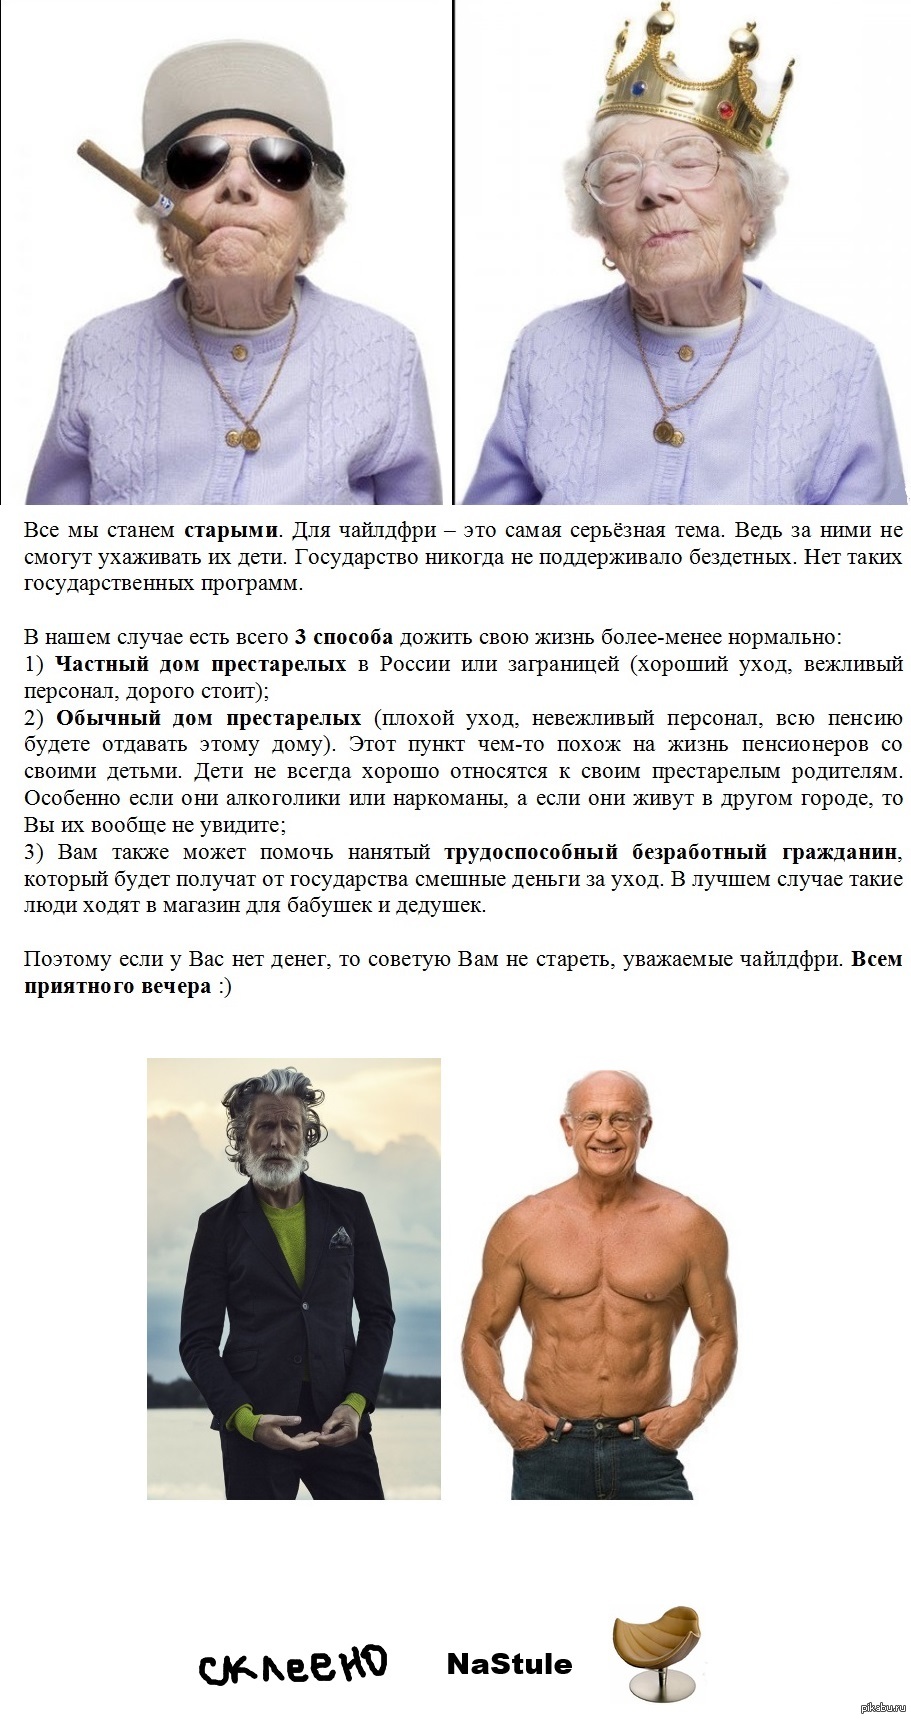 https://cs.pikabu.ru/post_img/big/2013/12/16/10/1387208548_978643061.jpg